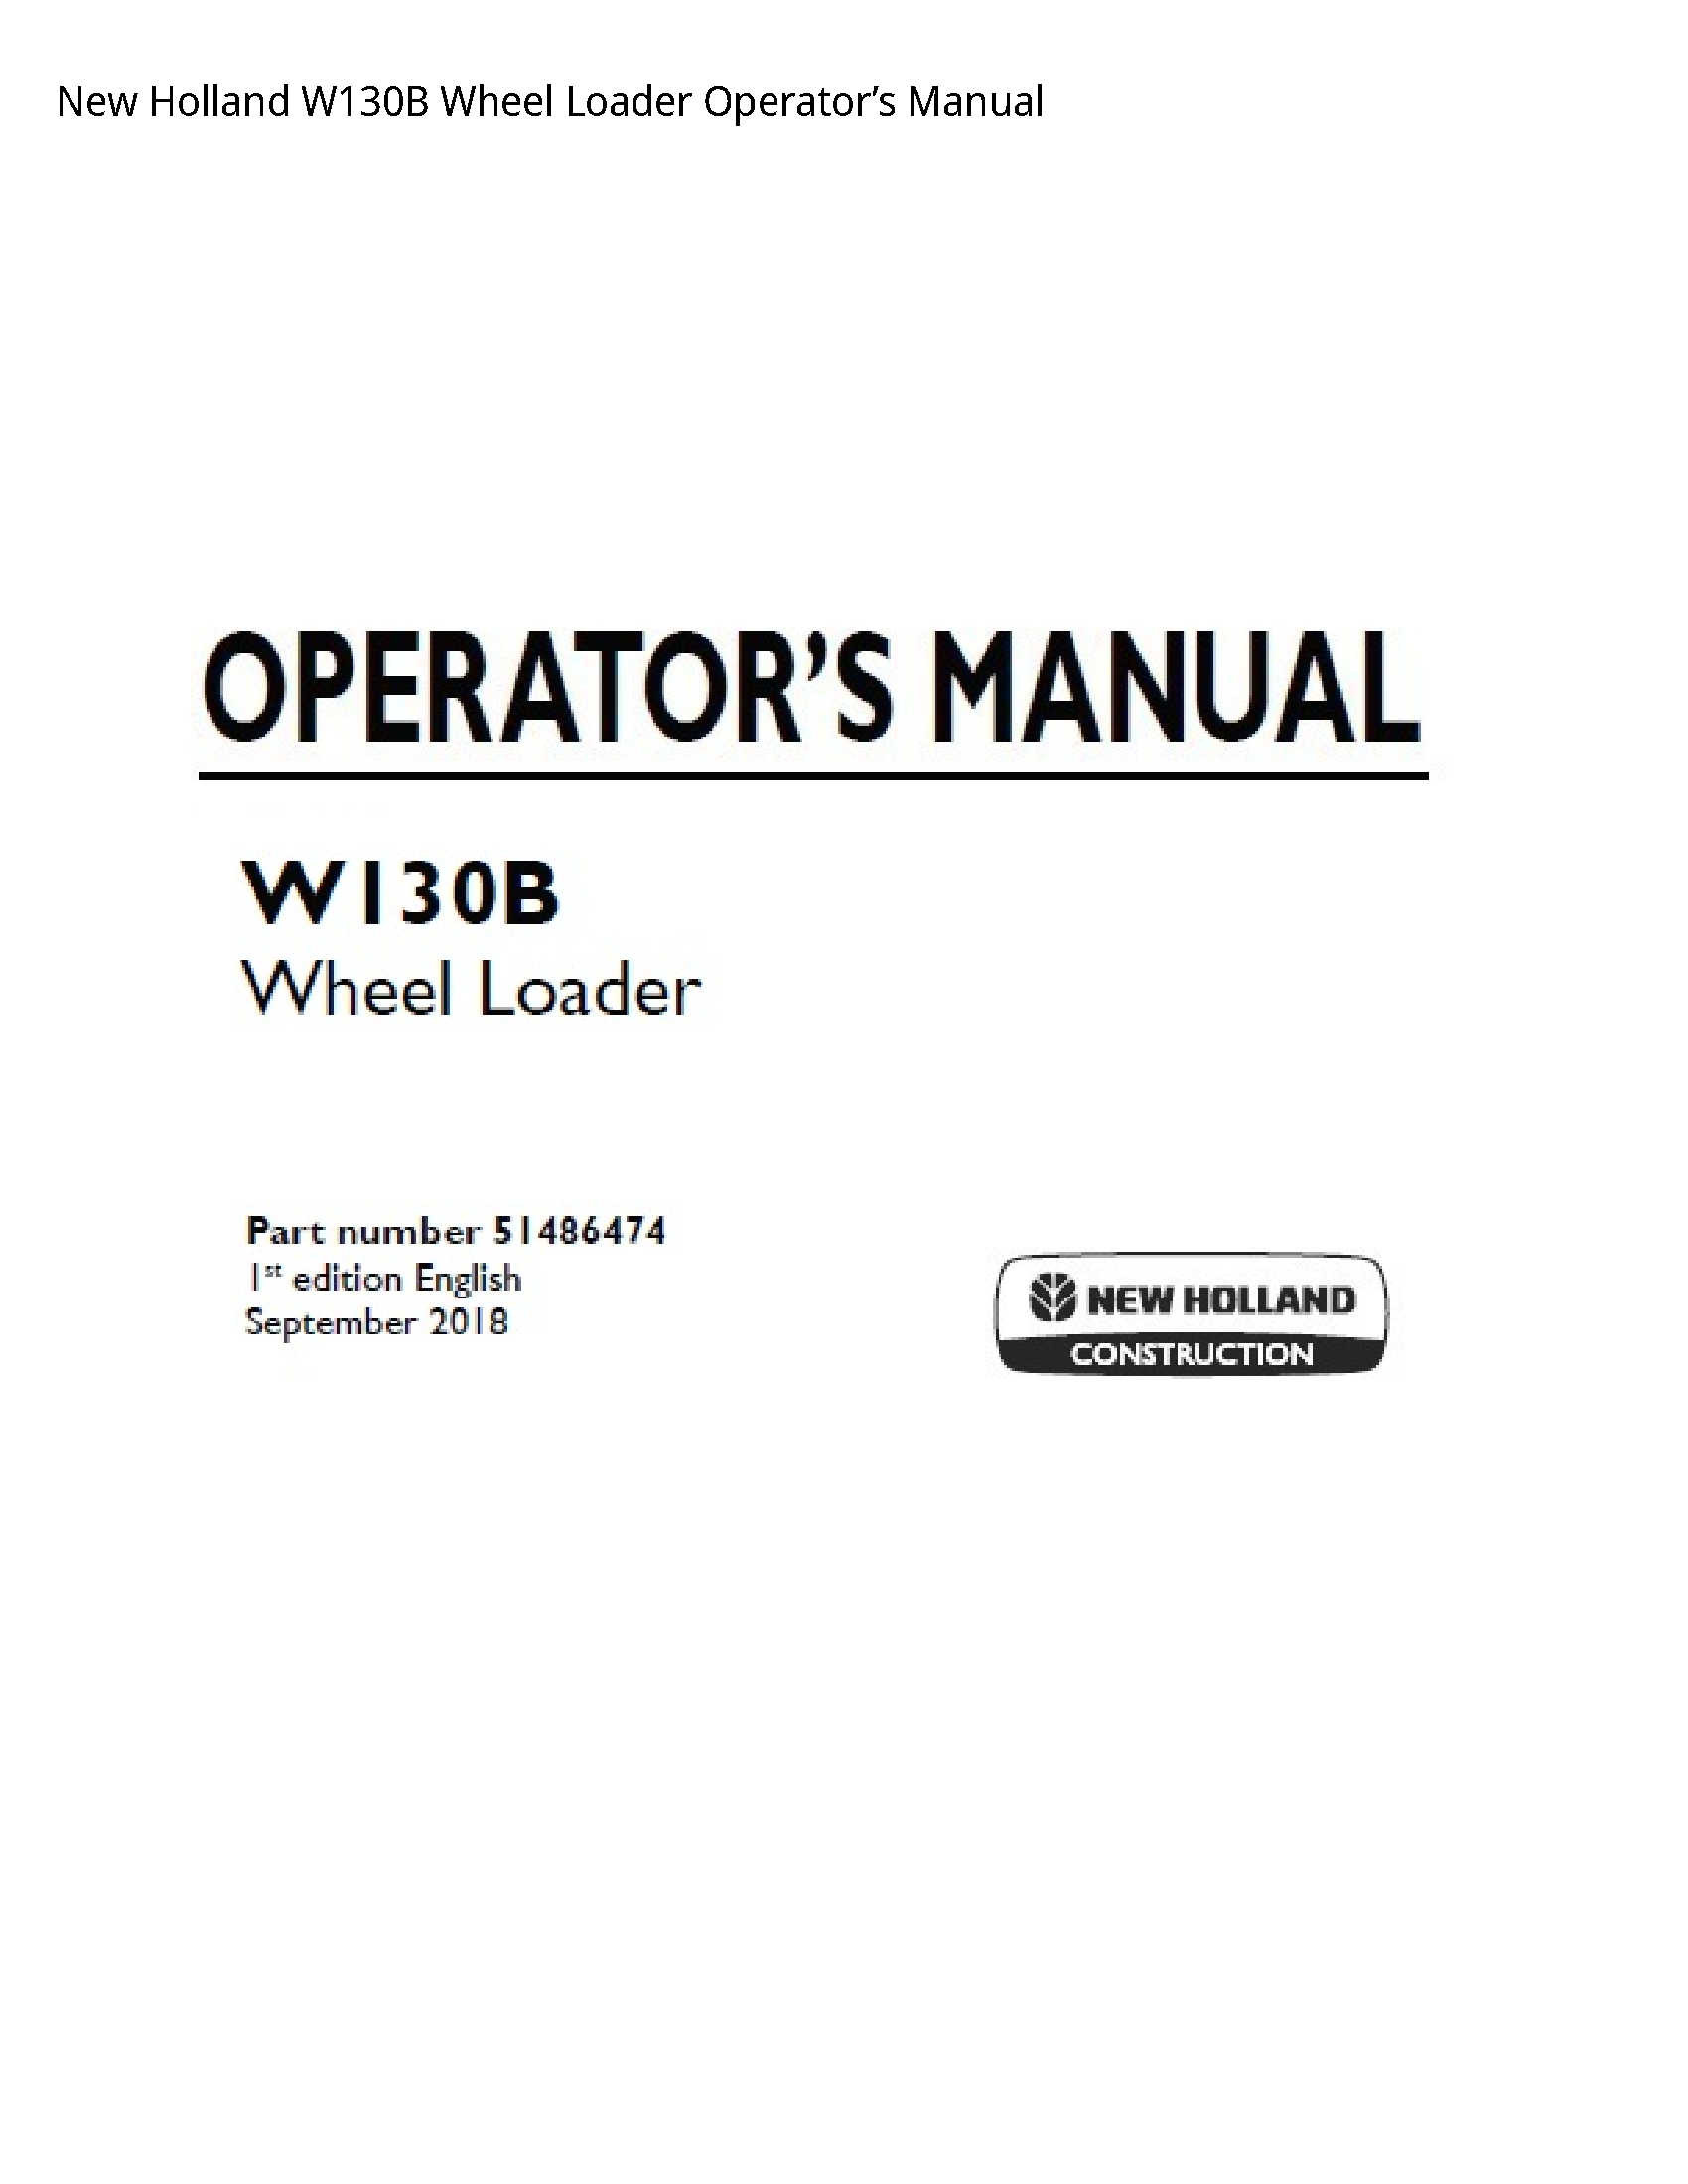 New Holland W130B Wheel Loader Operator’s manual